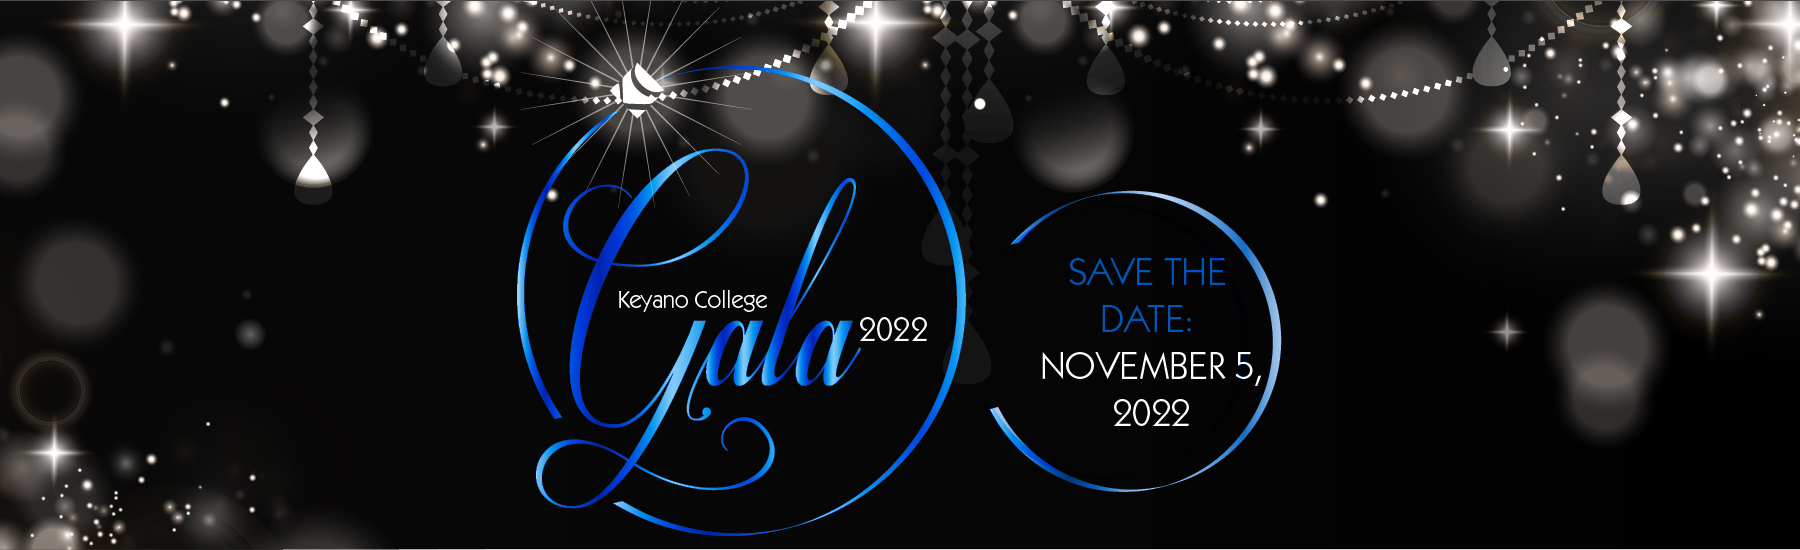 Keyano College Gala 2022 Save the Date: november 5, 2022